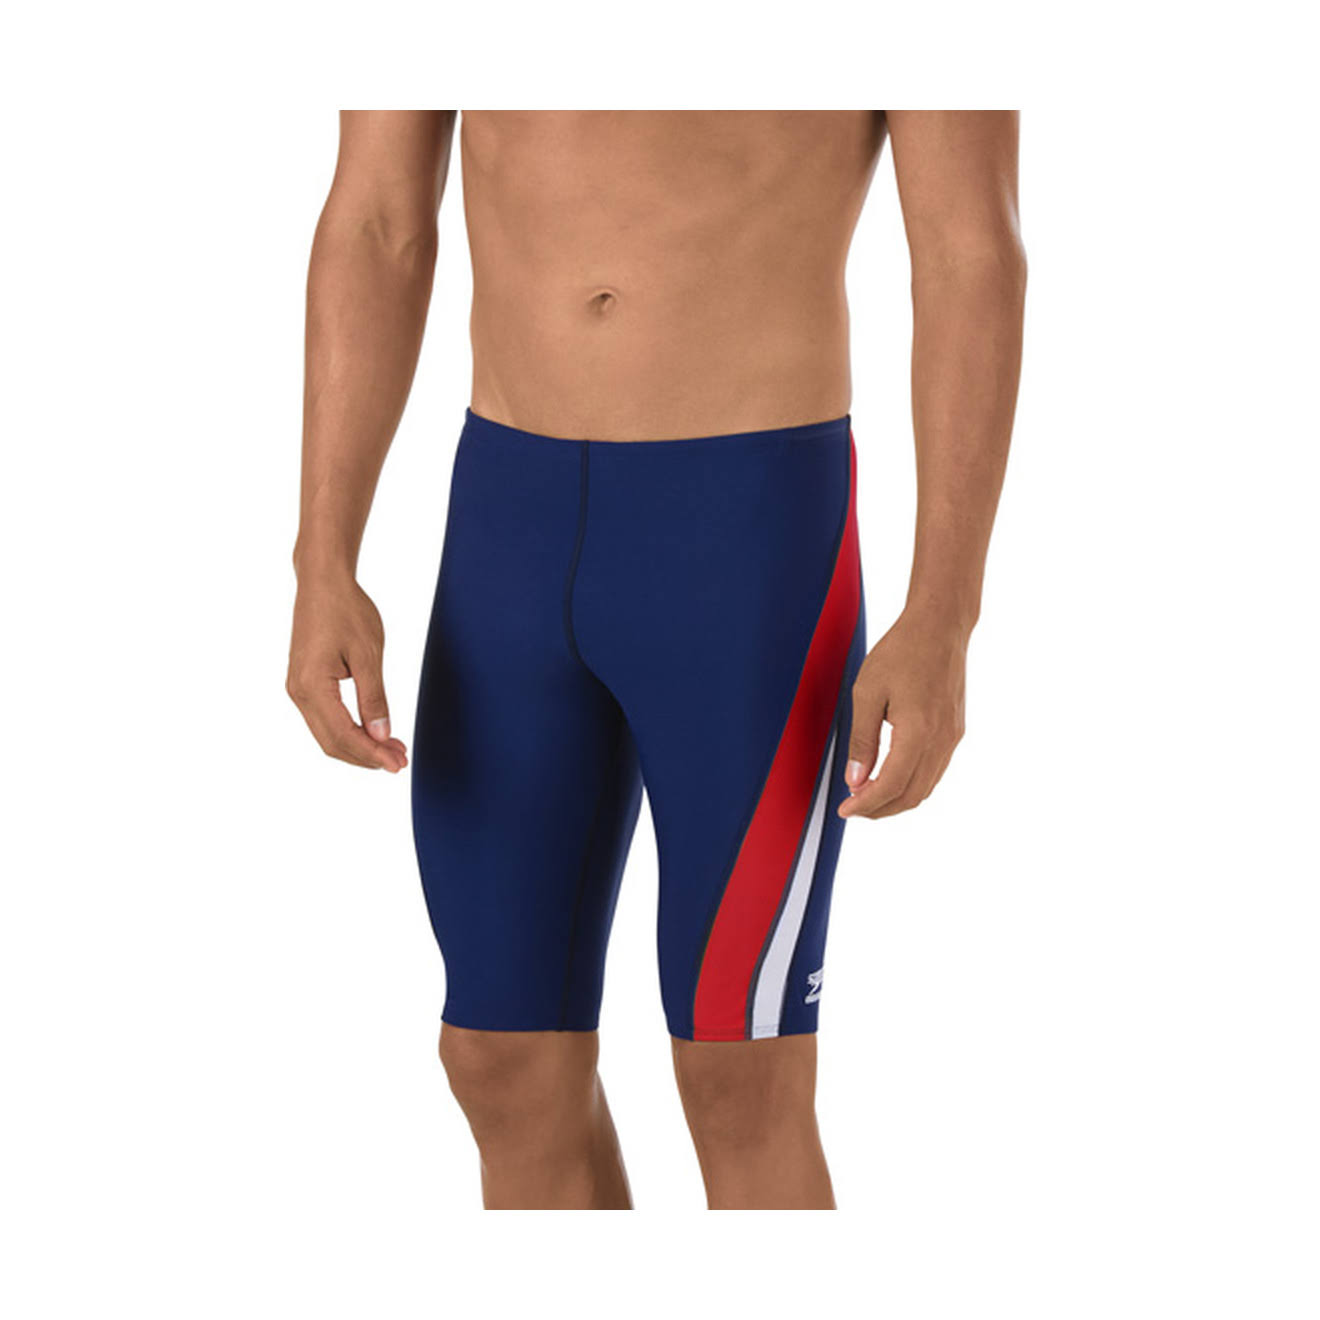 Speedo Mens Launch Splice Endurance Jammer Swimsuit - Navy, Red and White